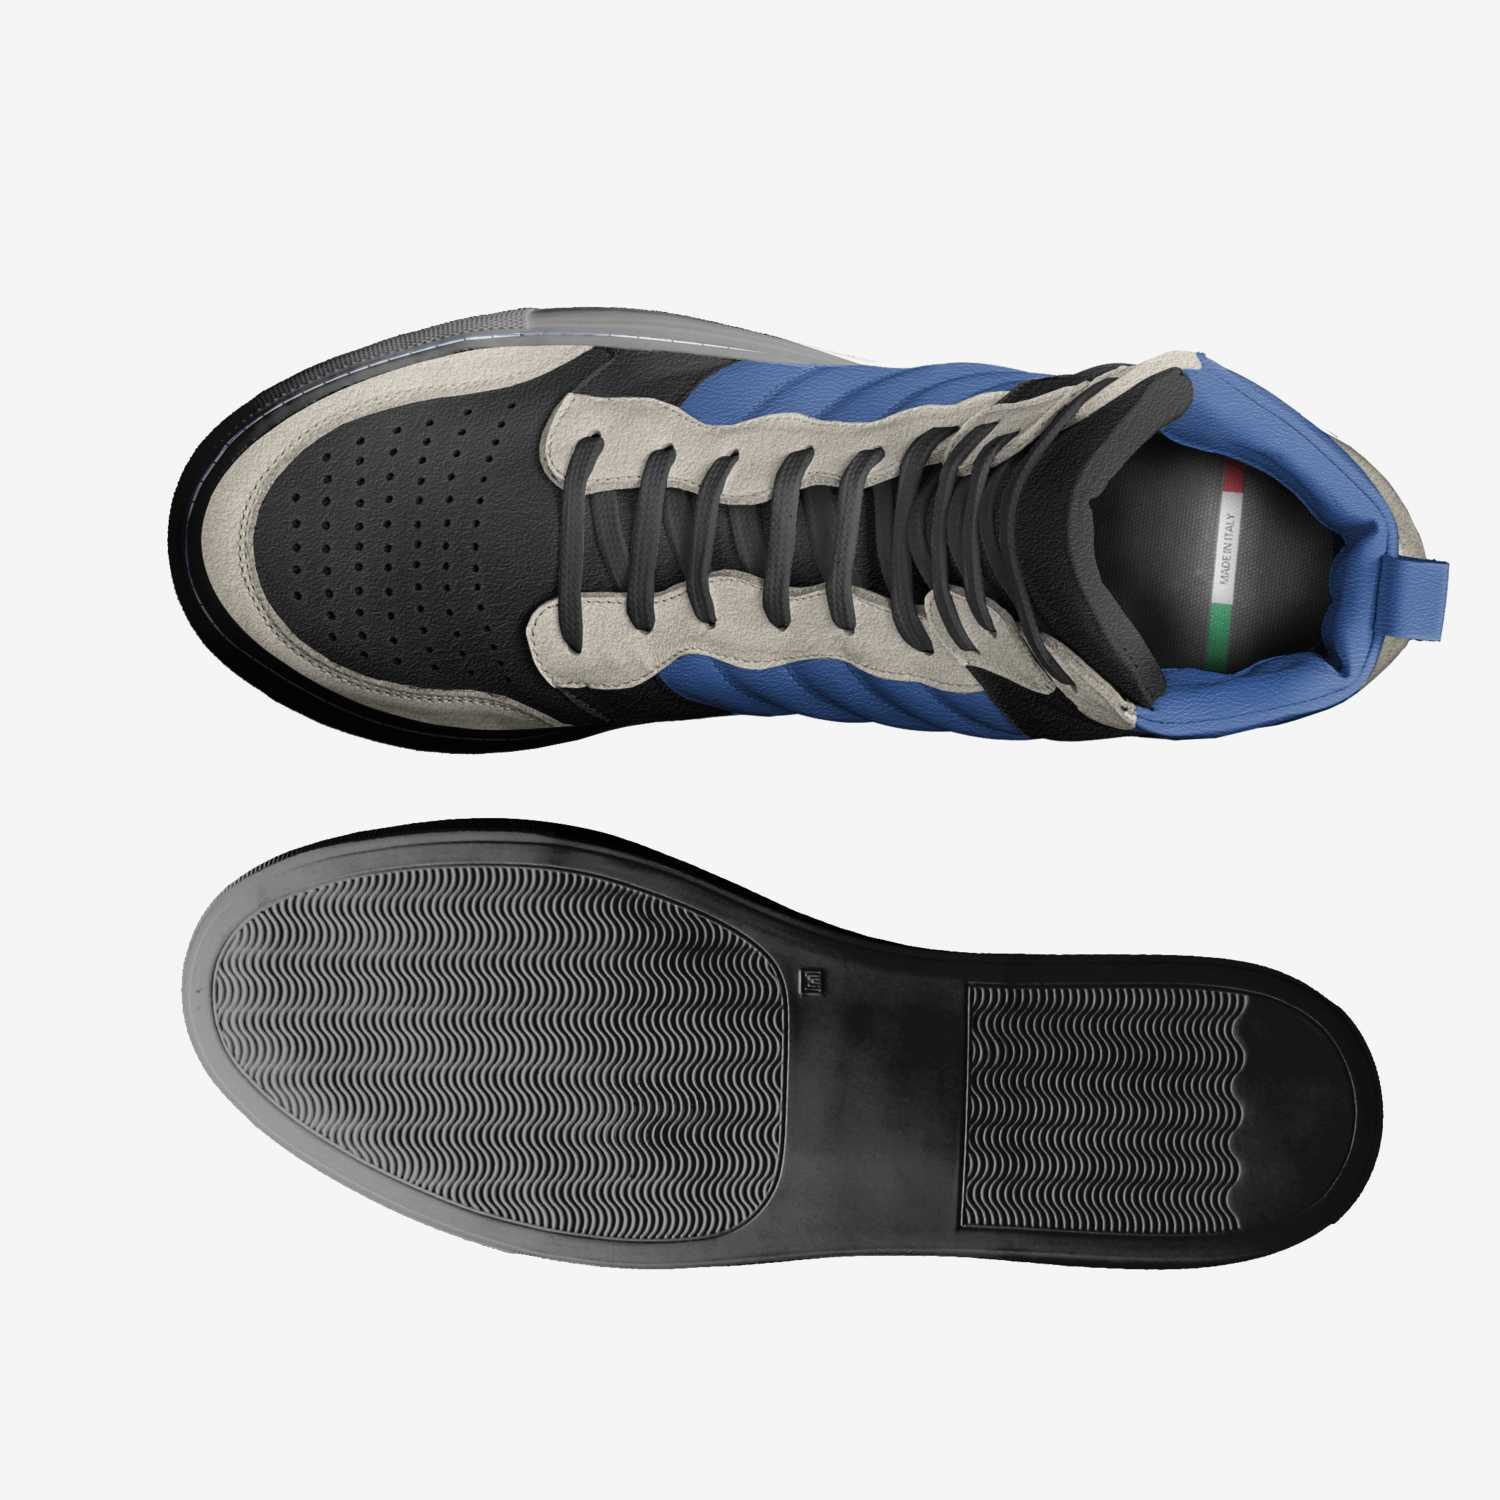 SOSA-A1 | A Custom Shoe concept by Sedric Mcgee